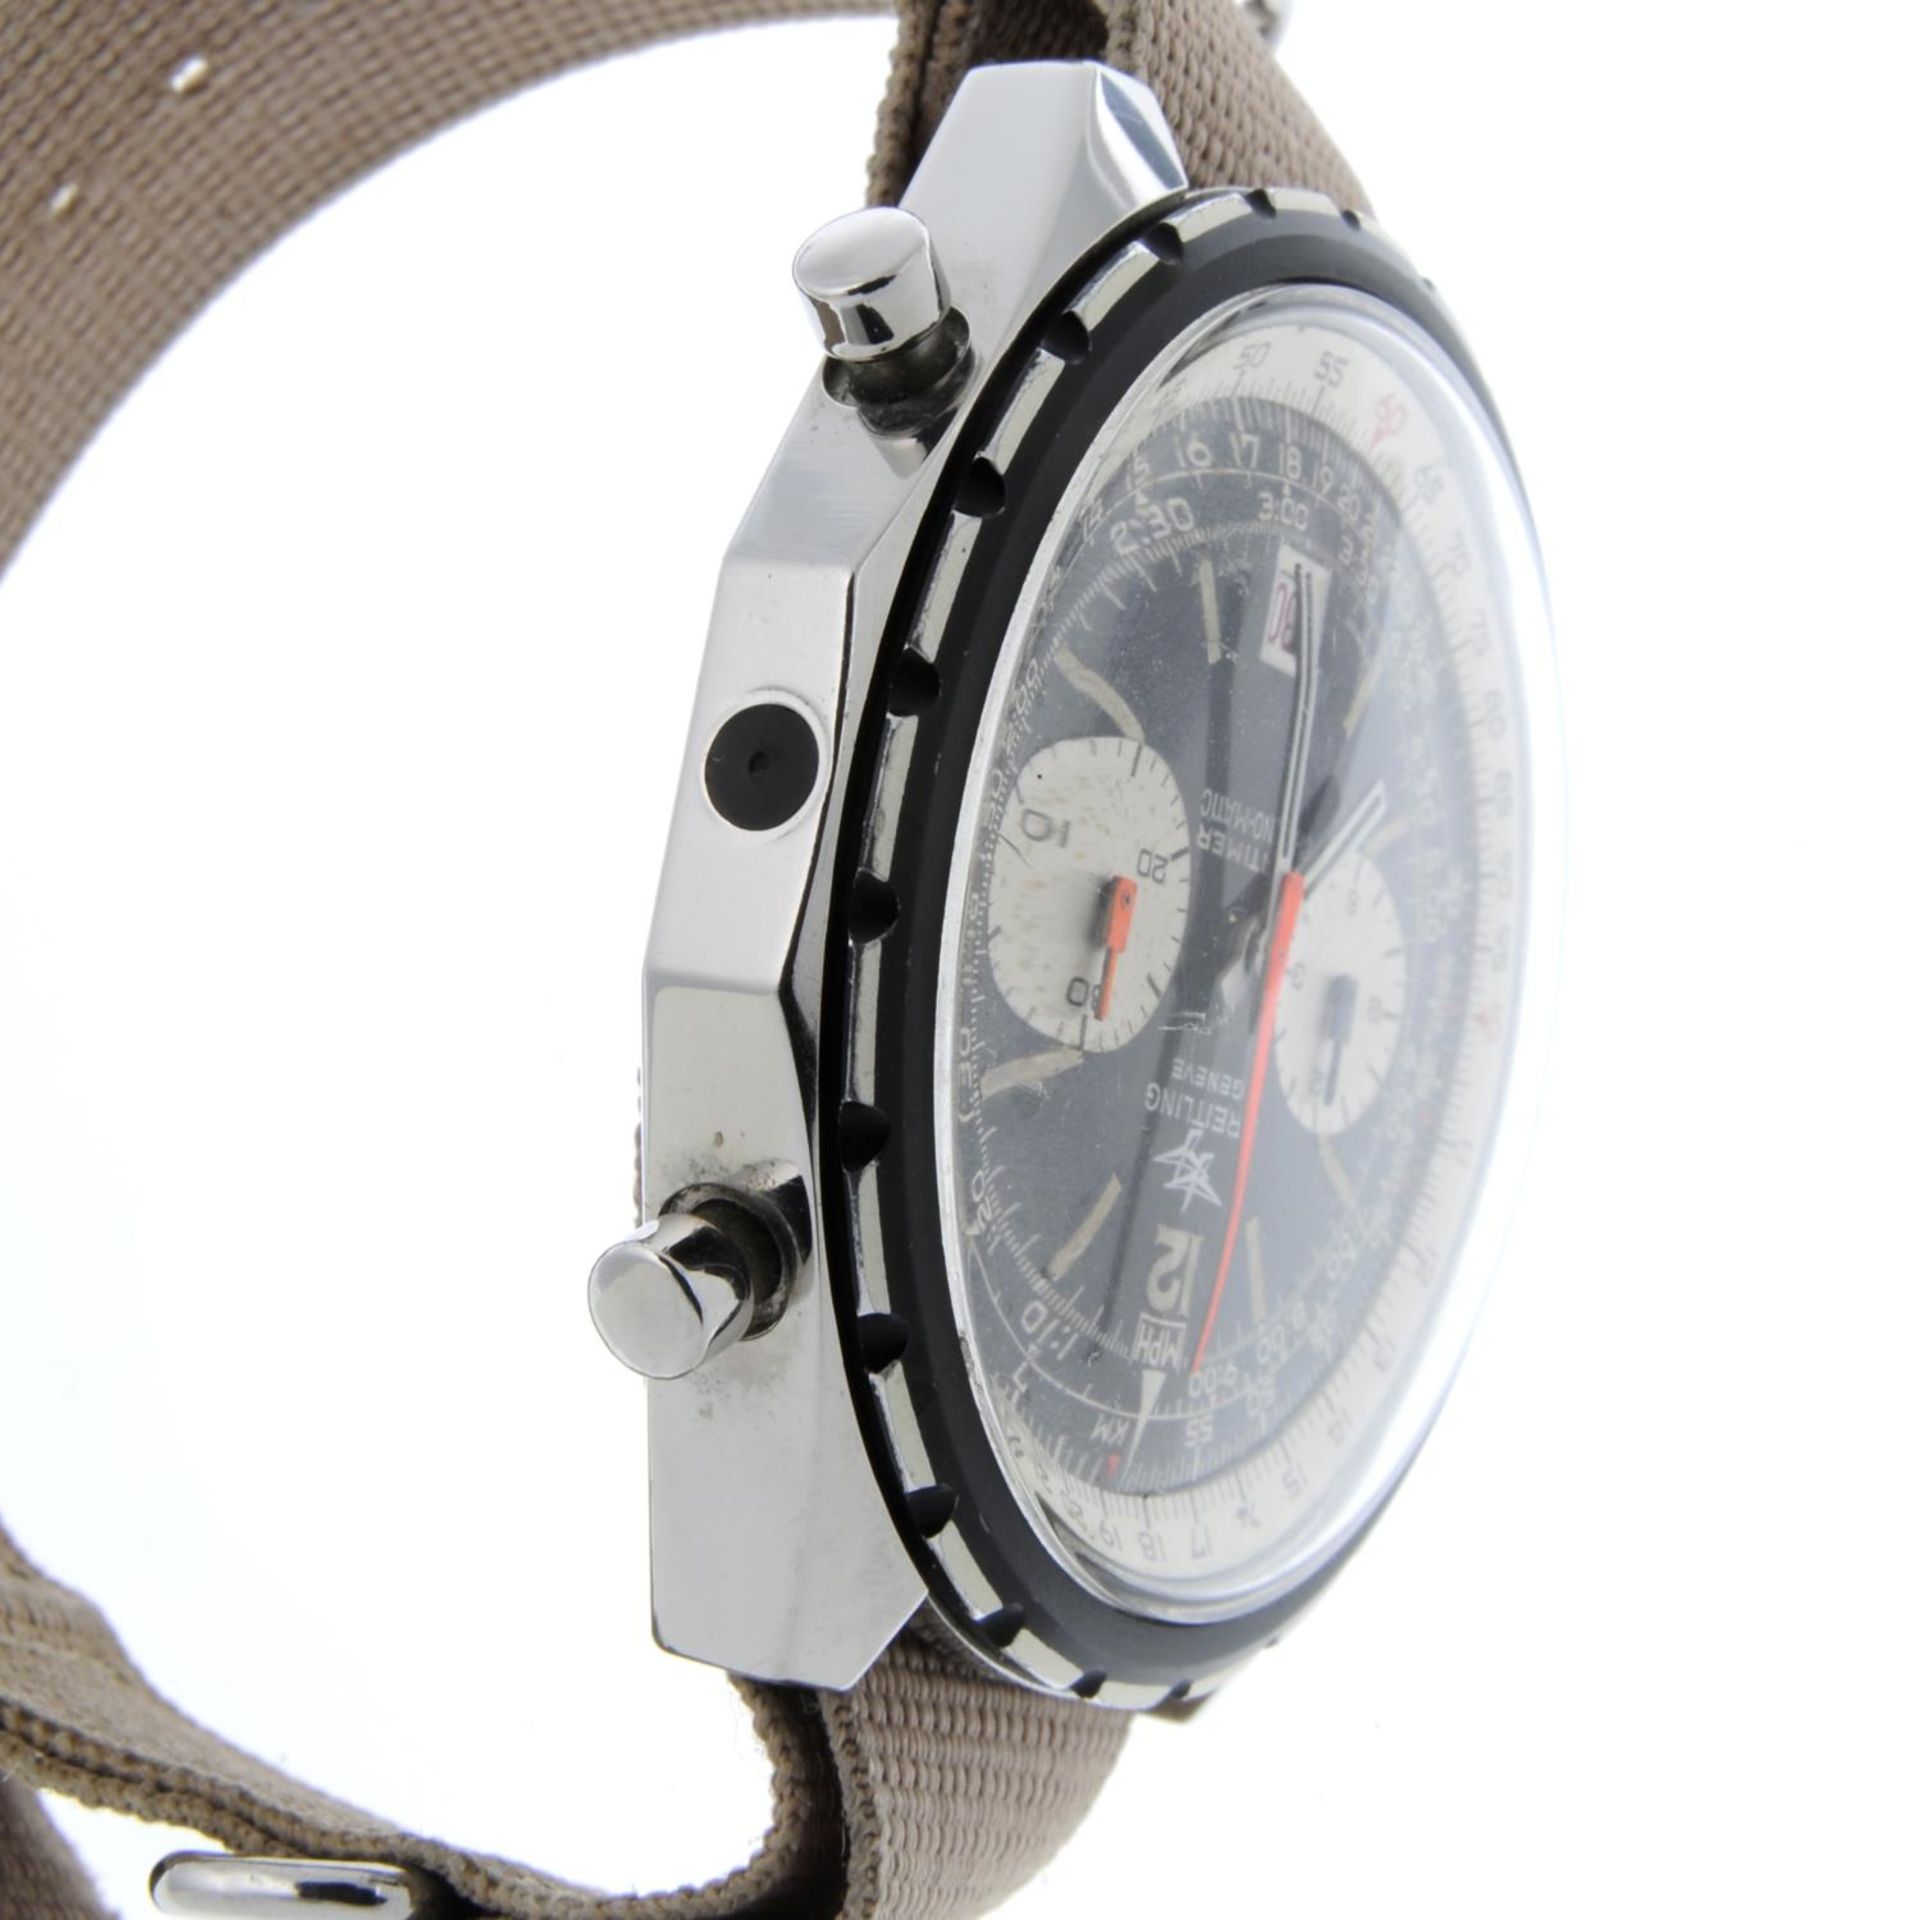 BREITLING - a gentleman's Navitimer Chrono-Matic chronograph wrist watch. - Image 4 of 5